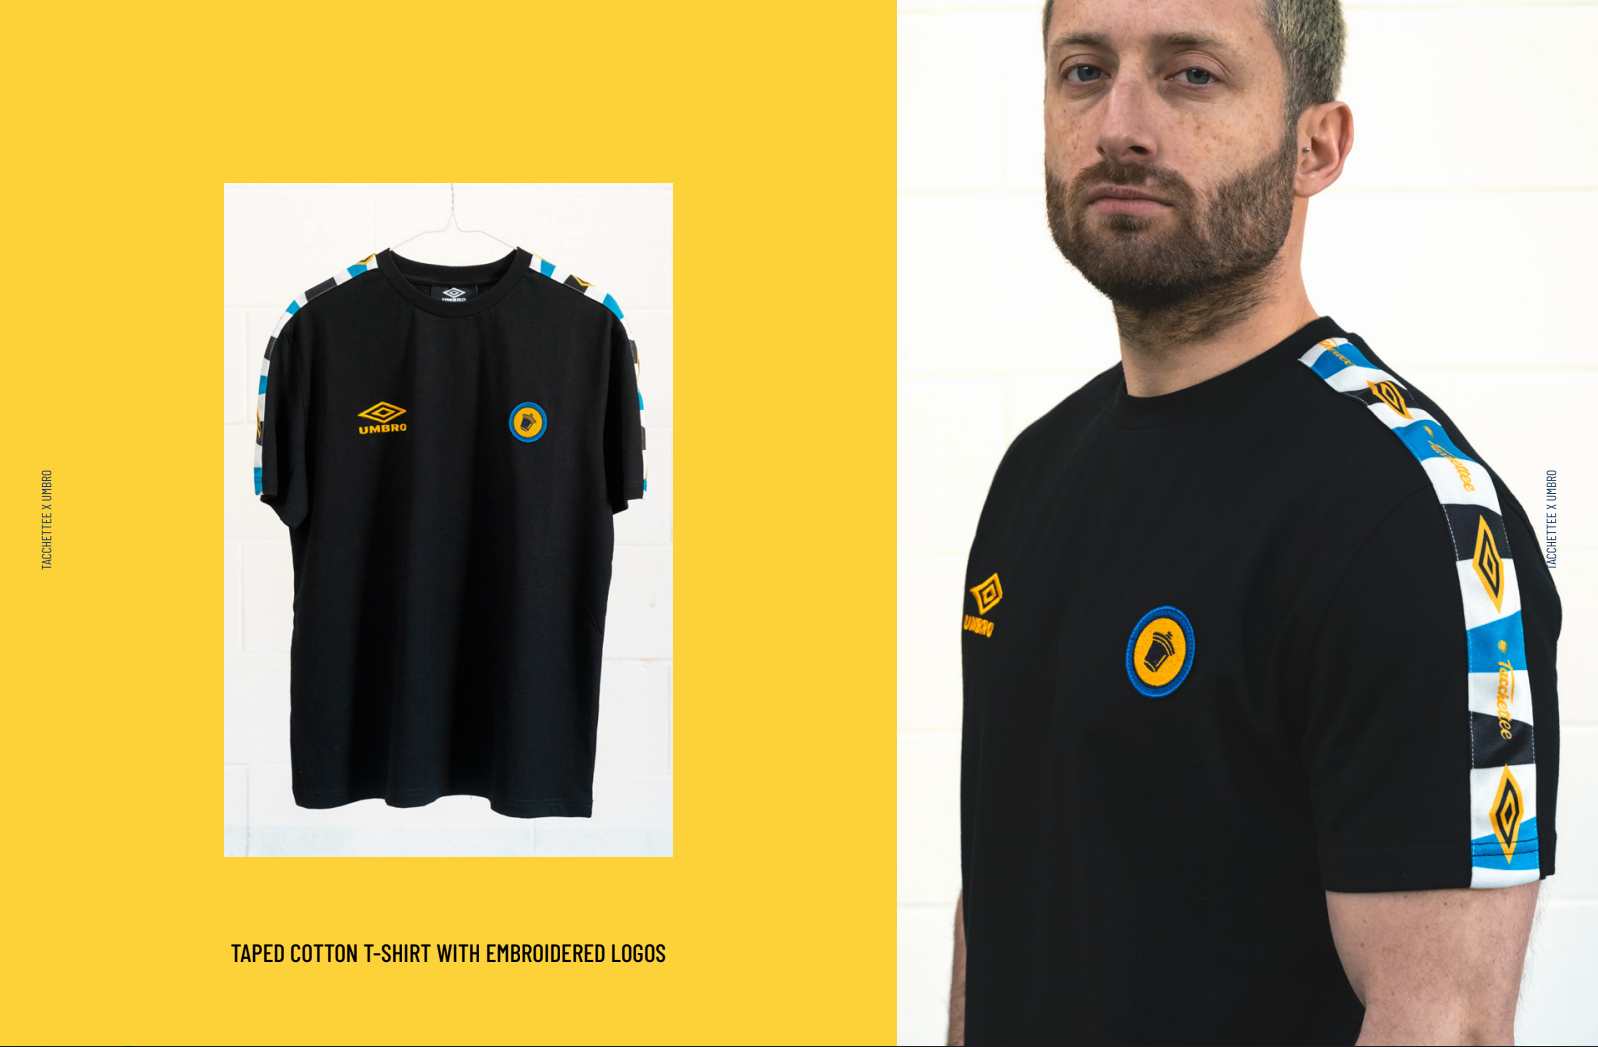 Umbro × Tacchettee Inter T-shirt-BLACK